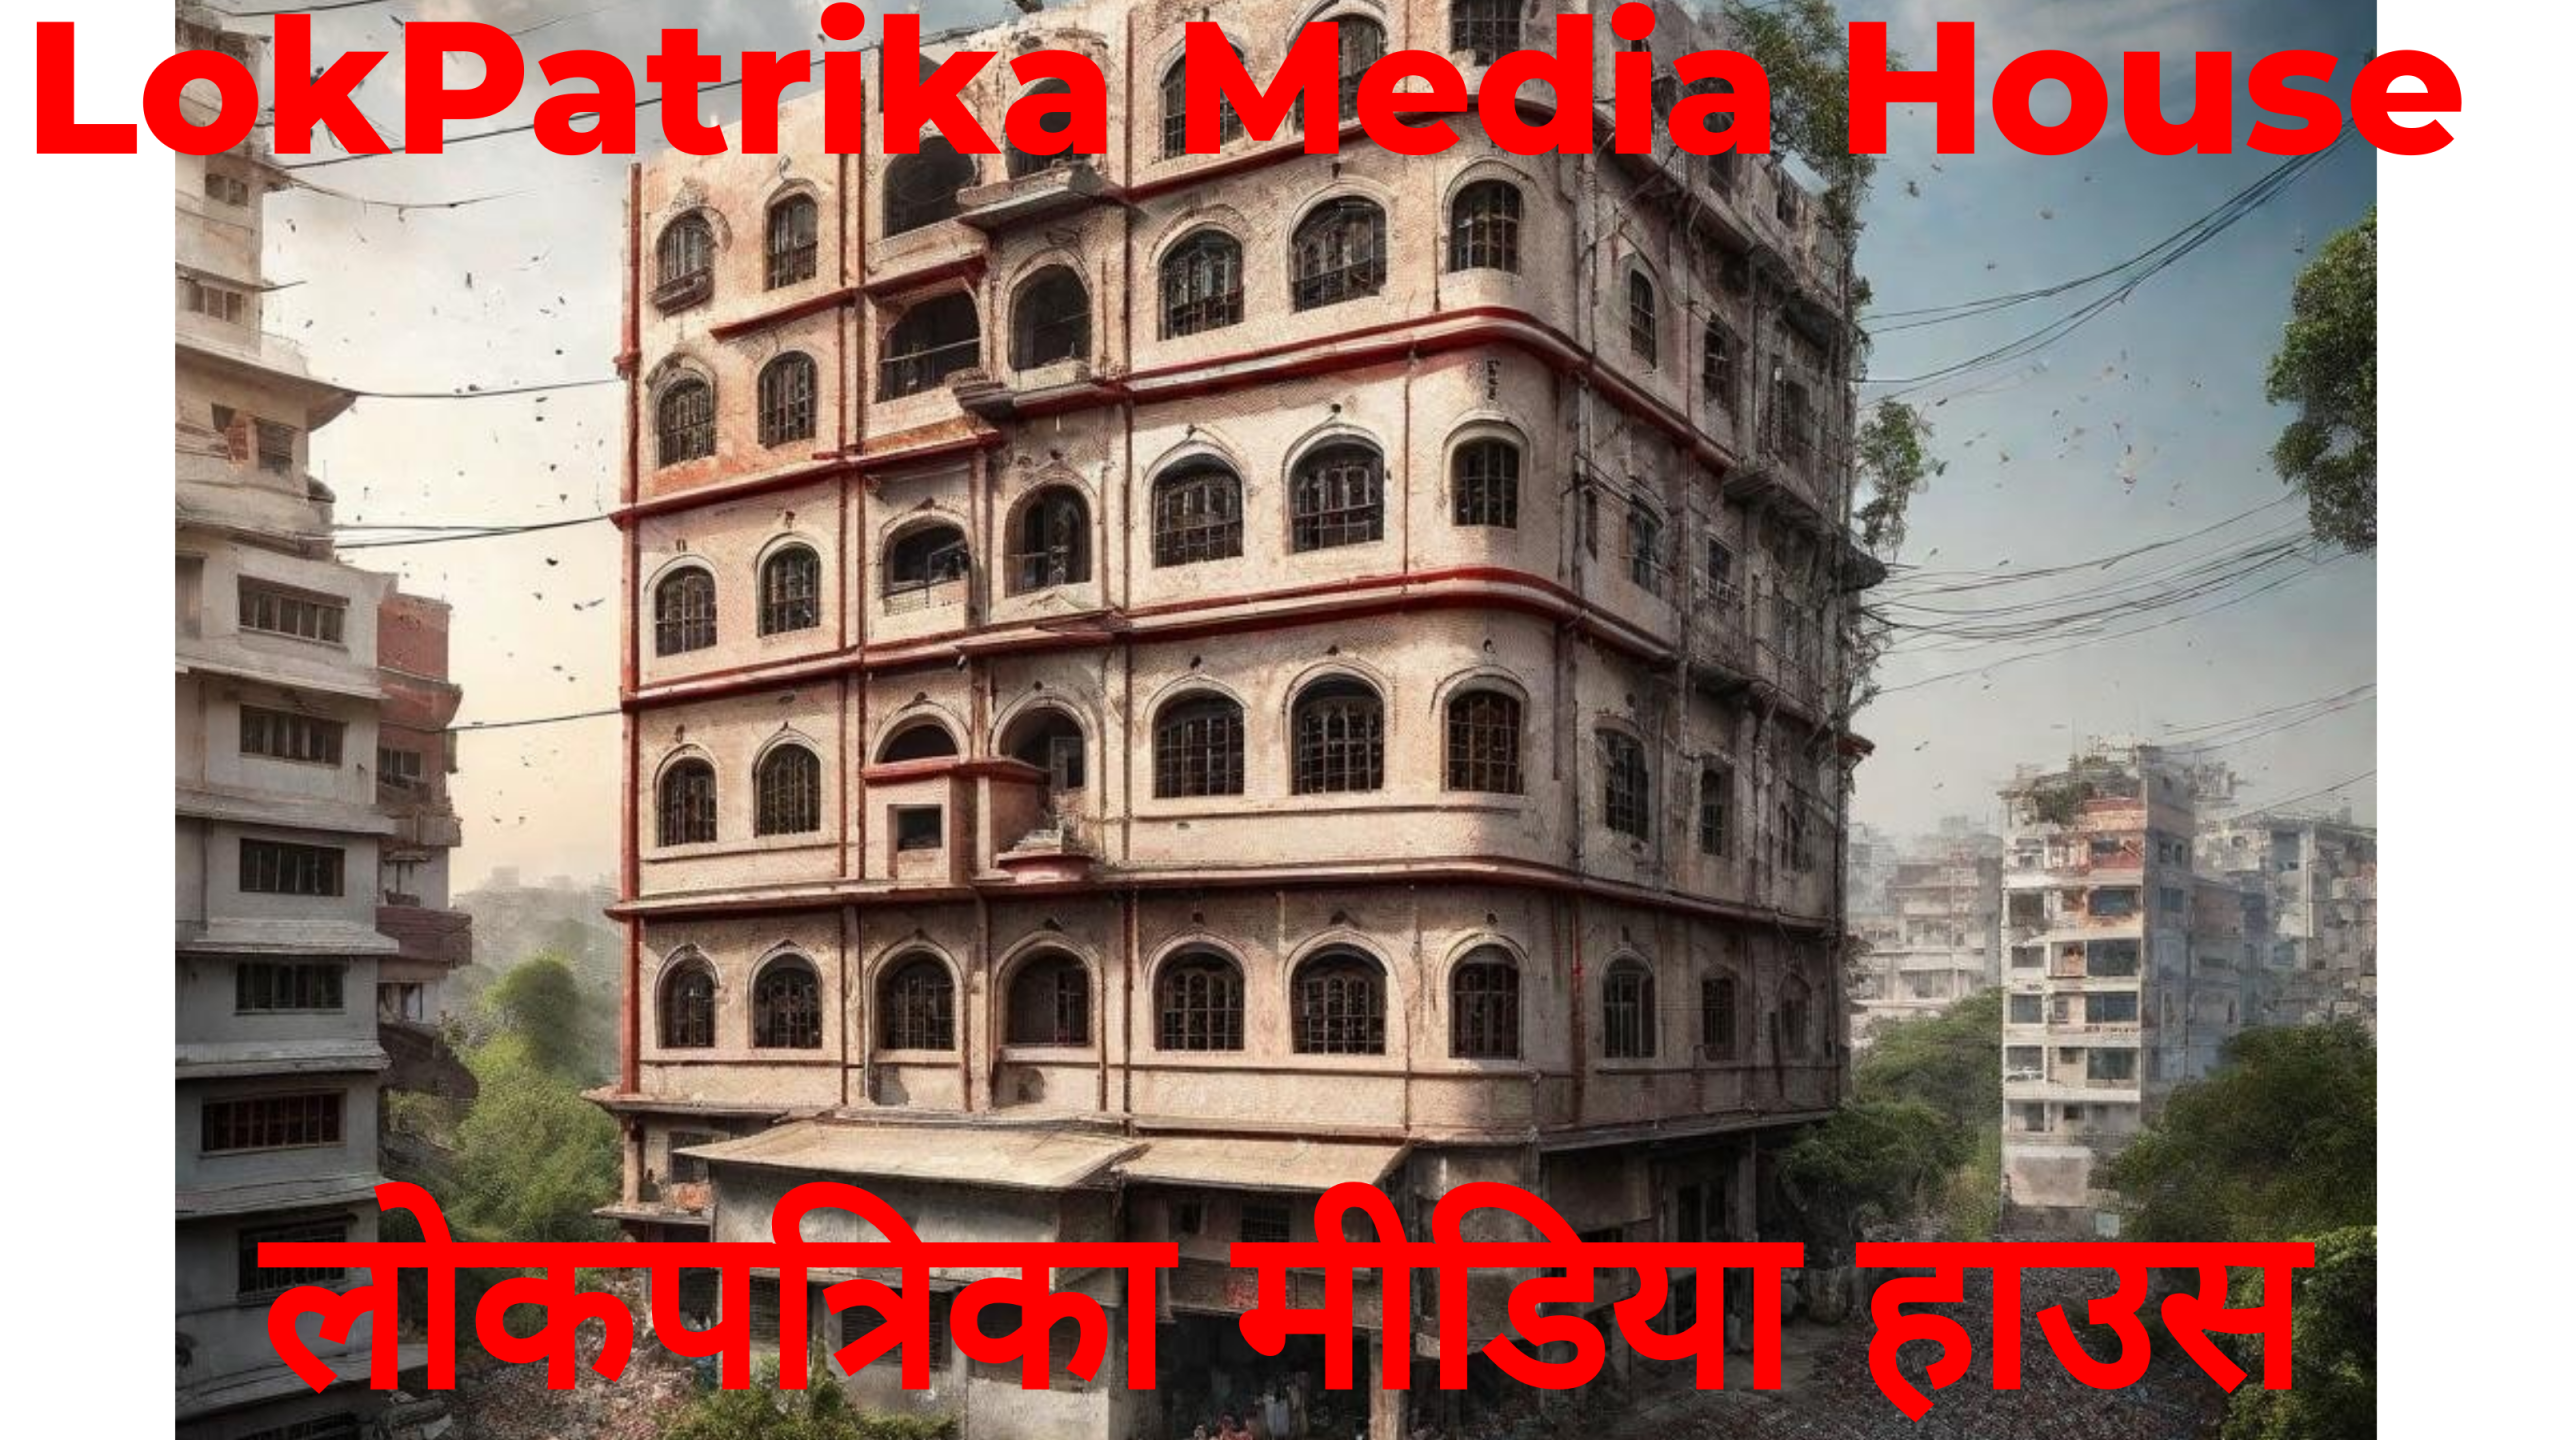 LokPatrika Media House